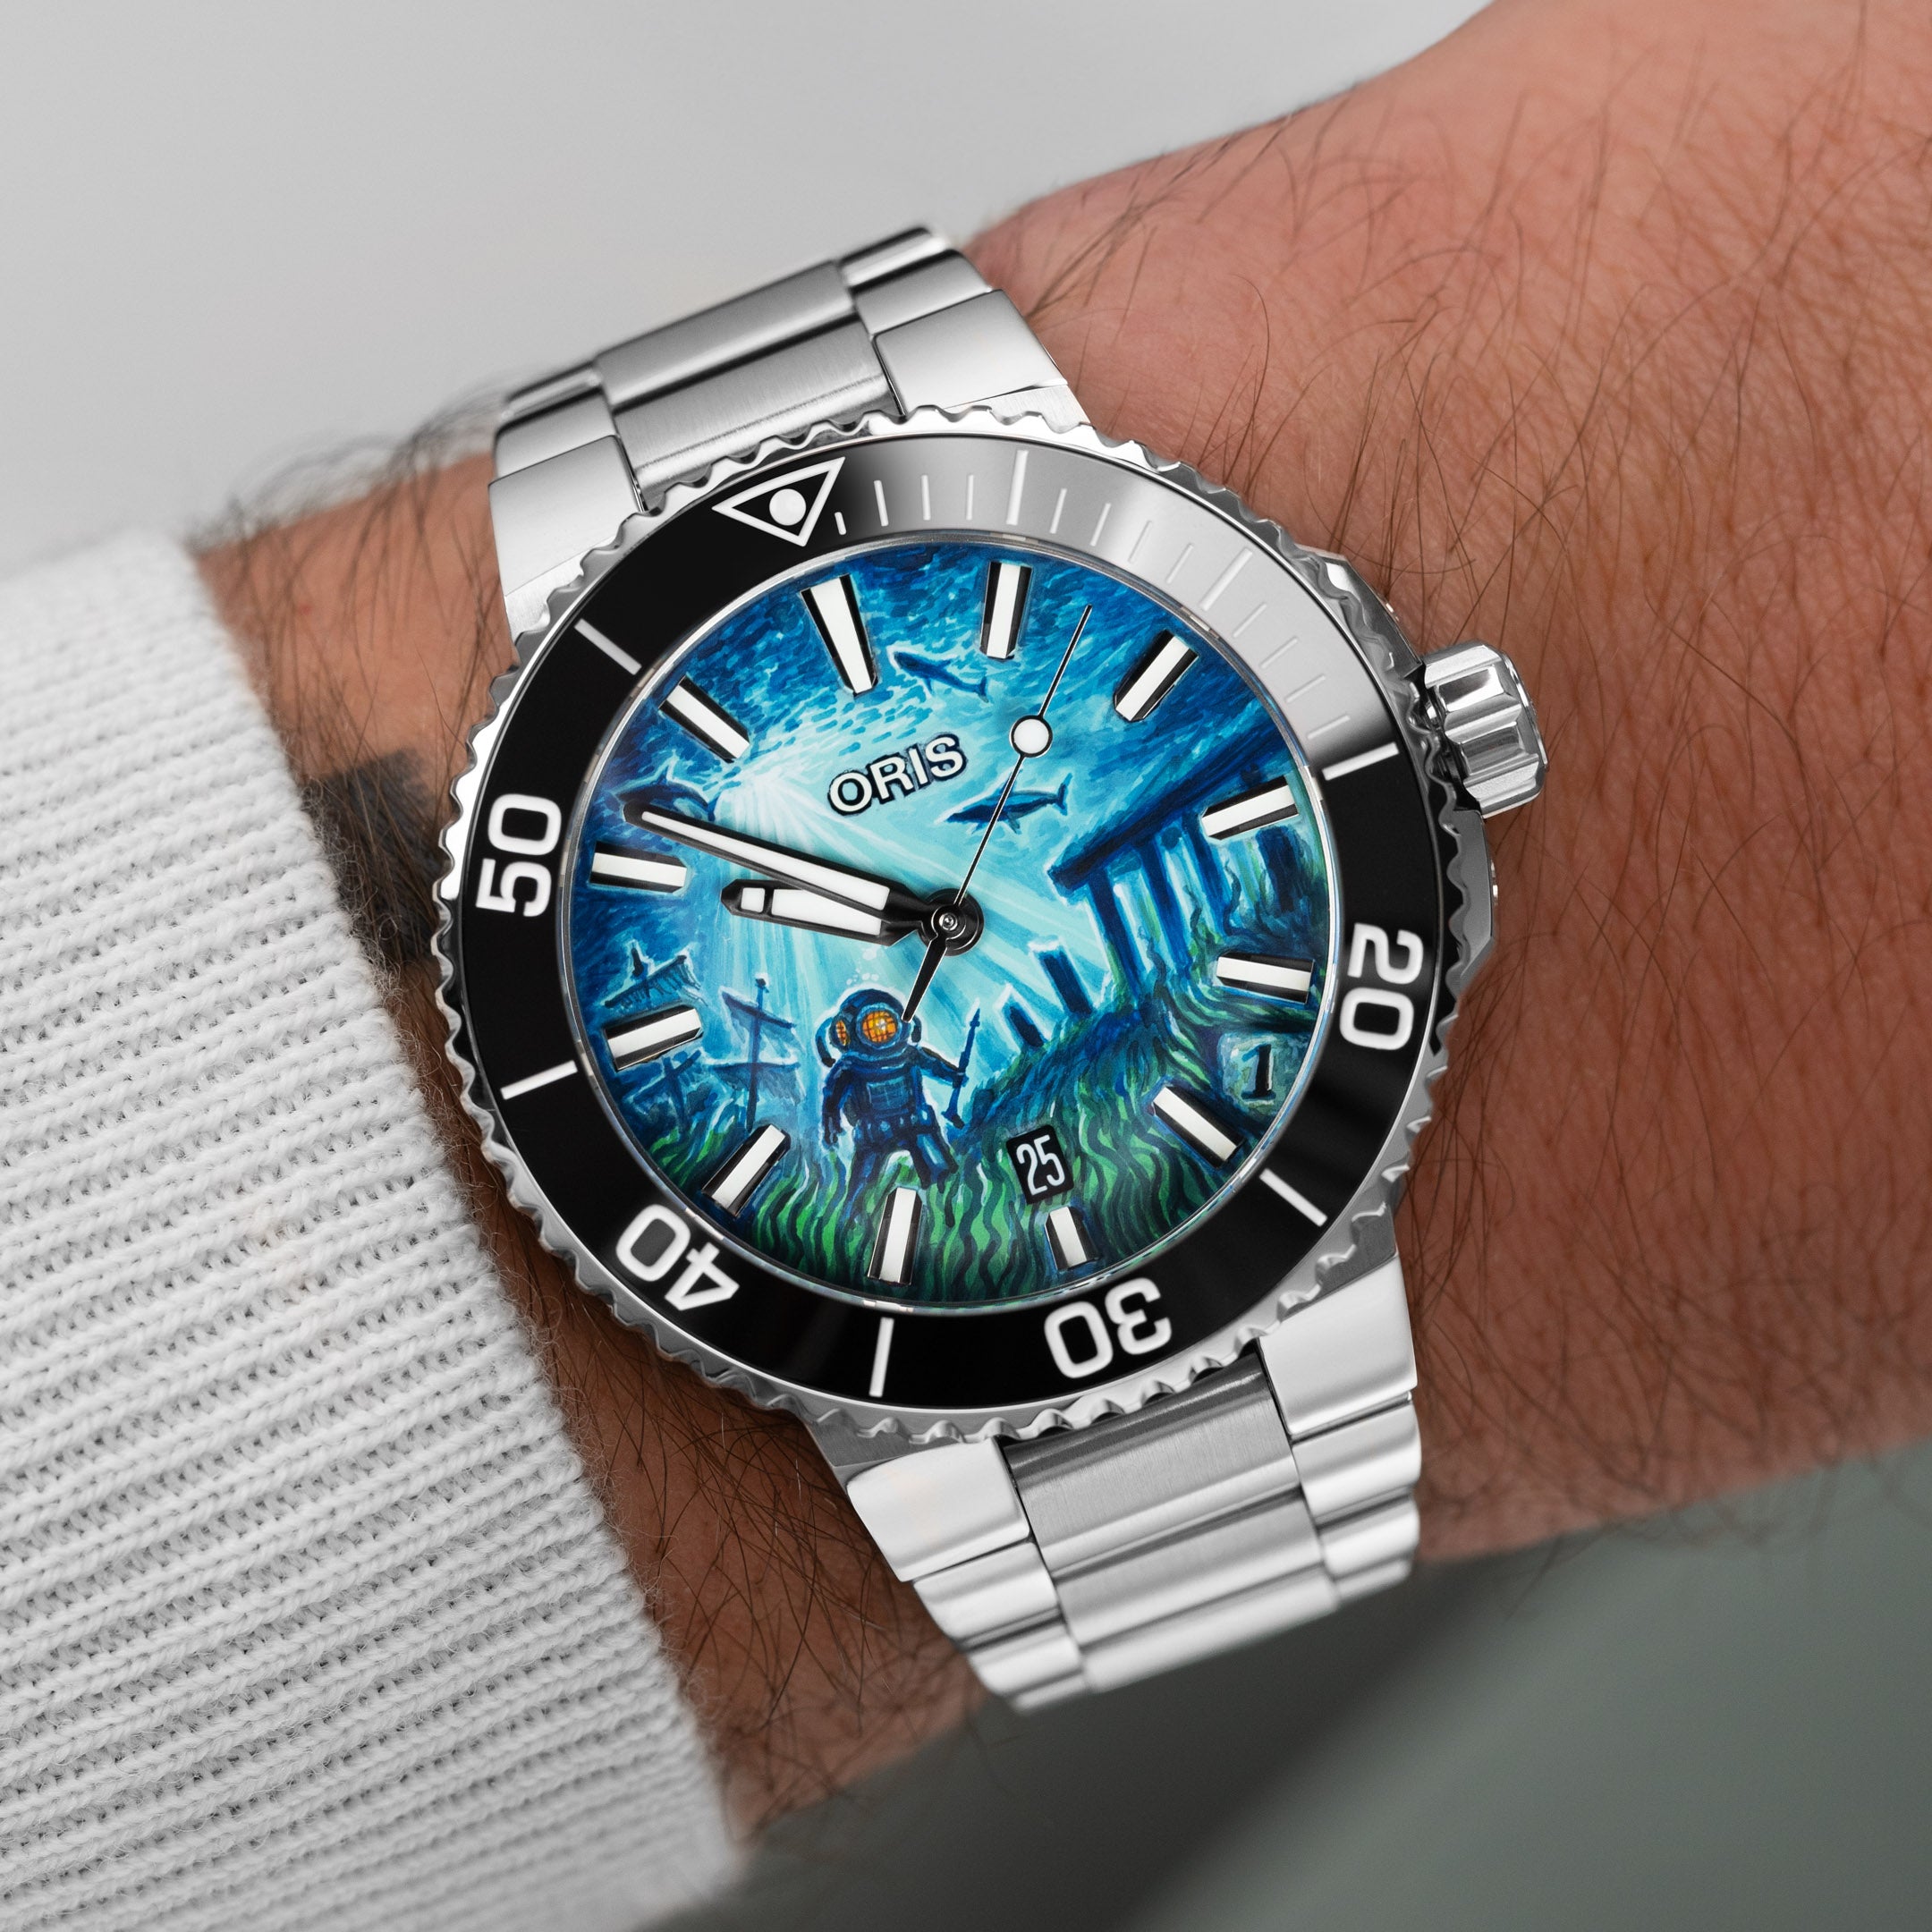 Oris Aquis Atlantis limited edition diver watch showcasing underwater exploration artistry on dial